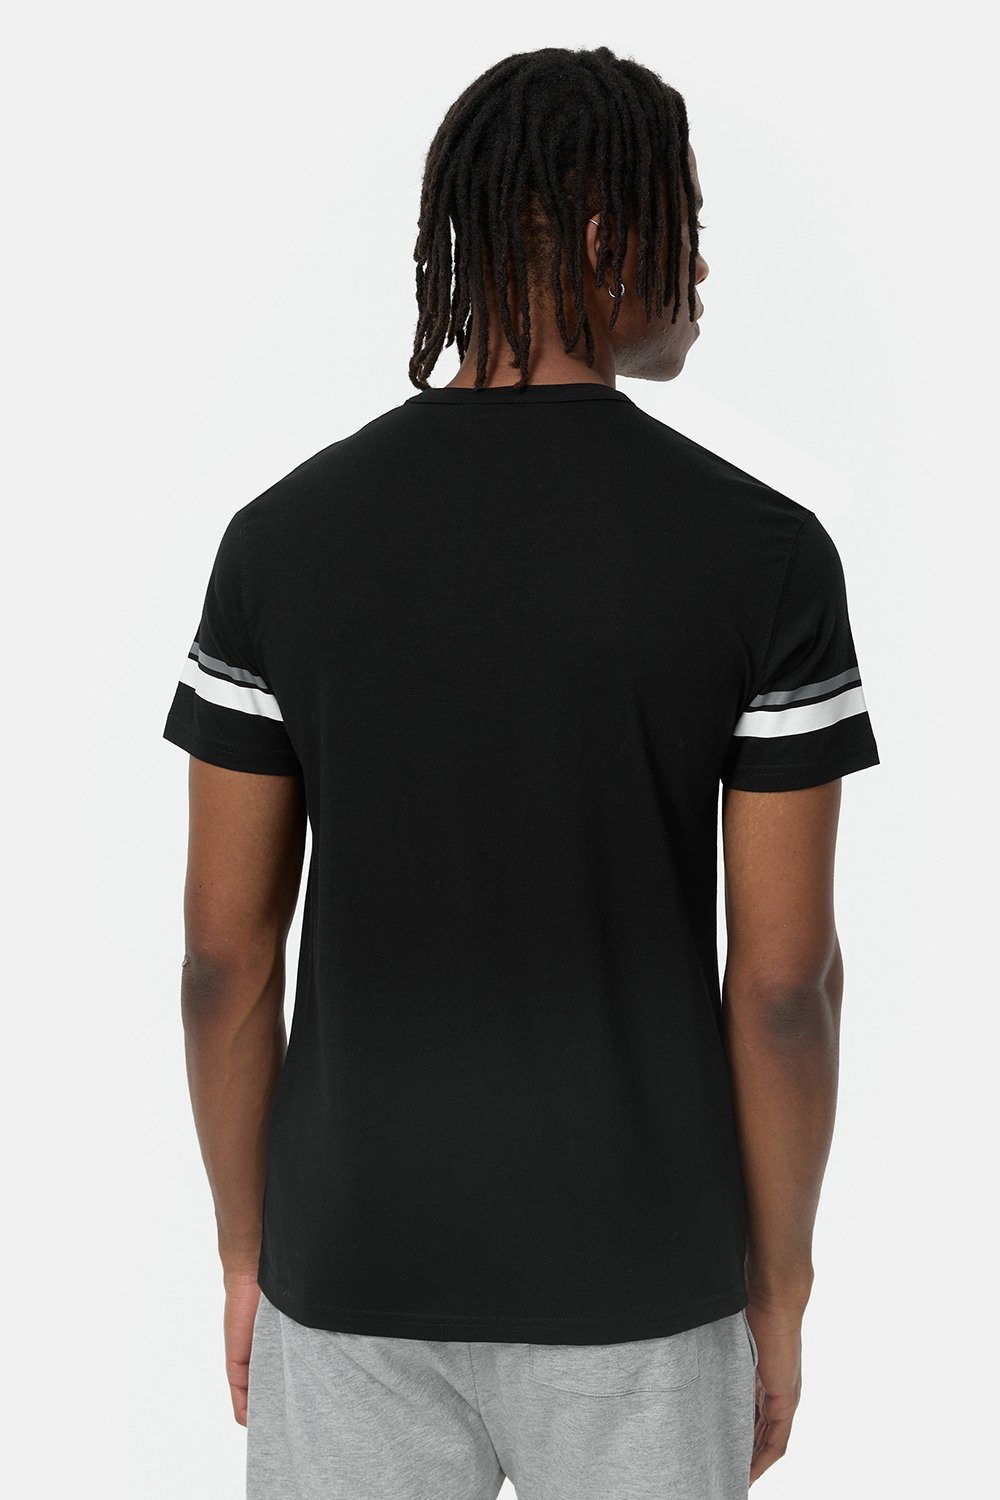 Lonsdale T-Shirt CREICH Black/White/Grey